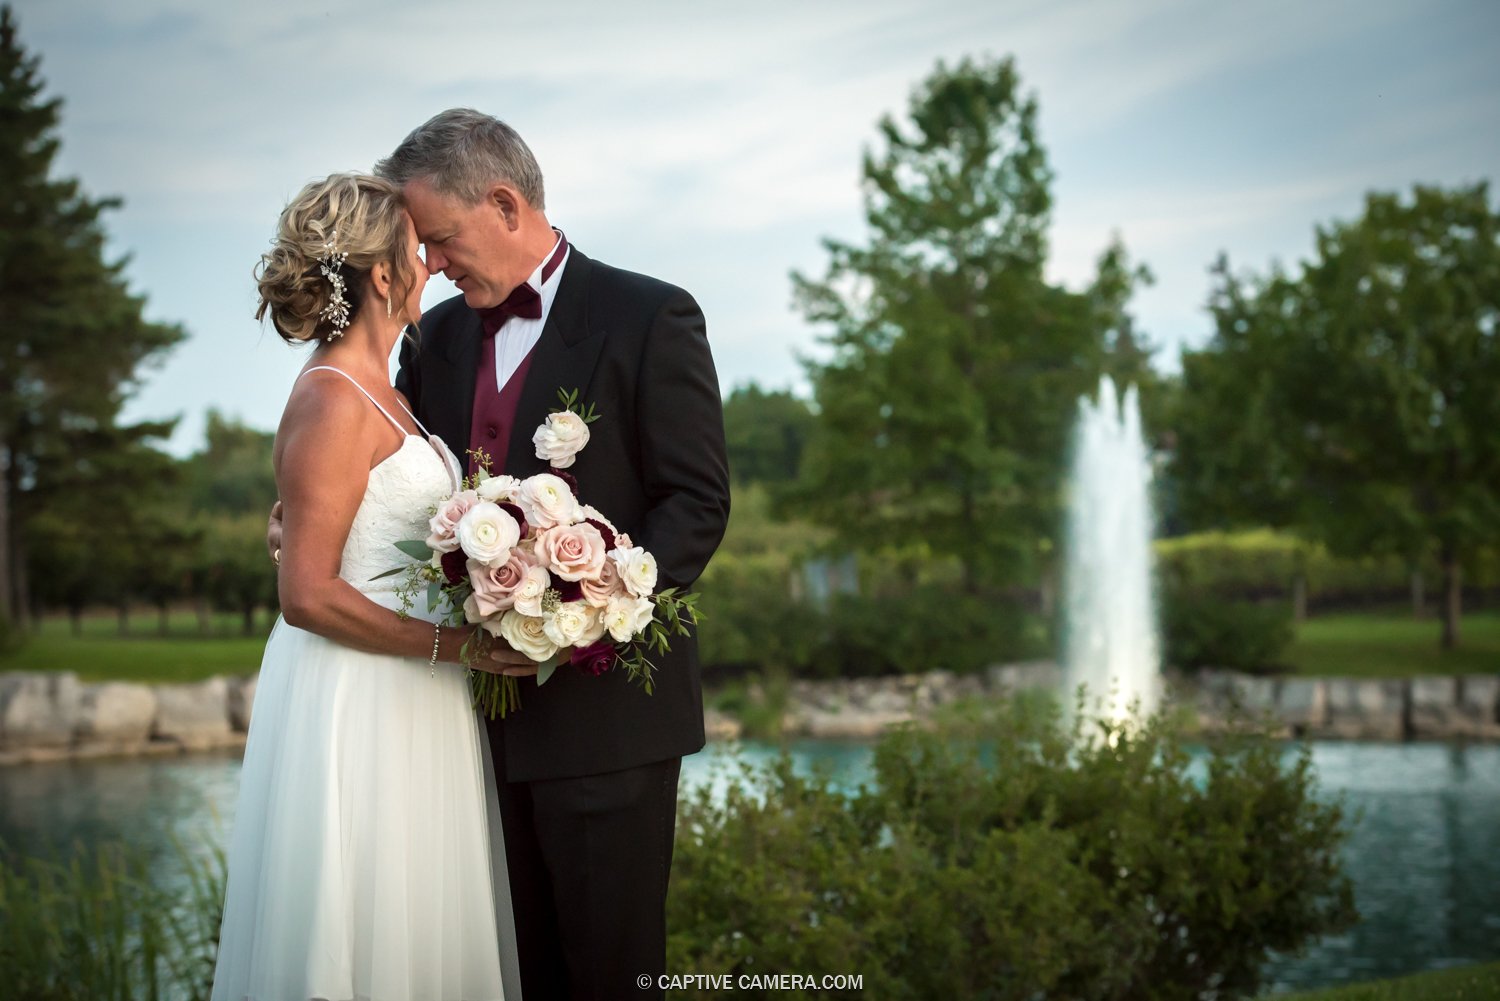 20230916 - Wedding - Mel and Erwin - Toronto Wedding Photographer - Captive Camera - CC1_9864.jpg